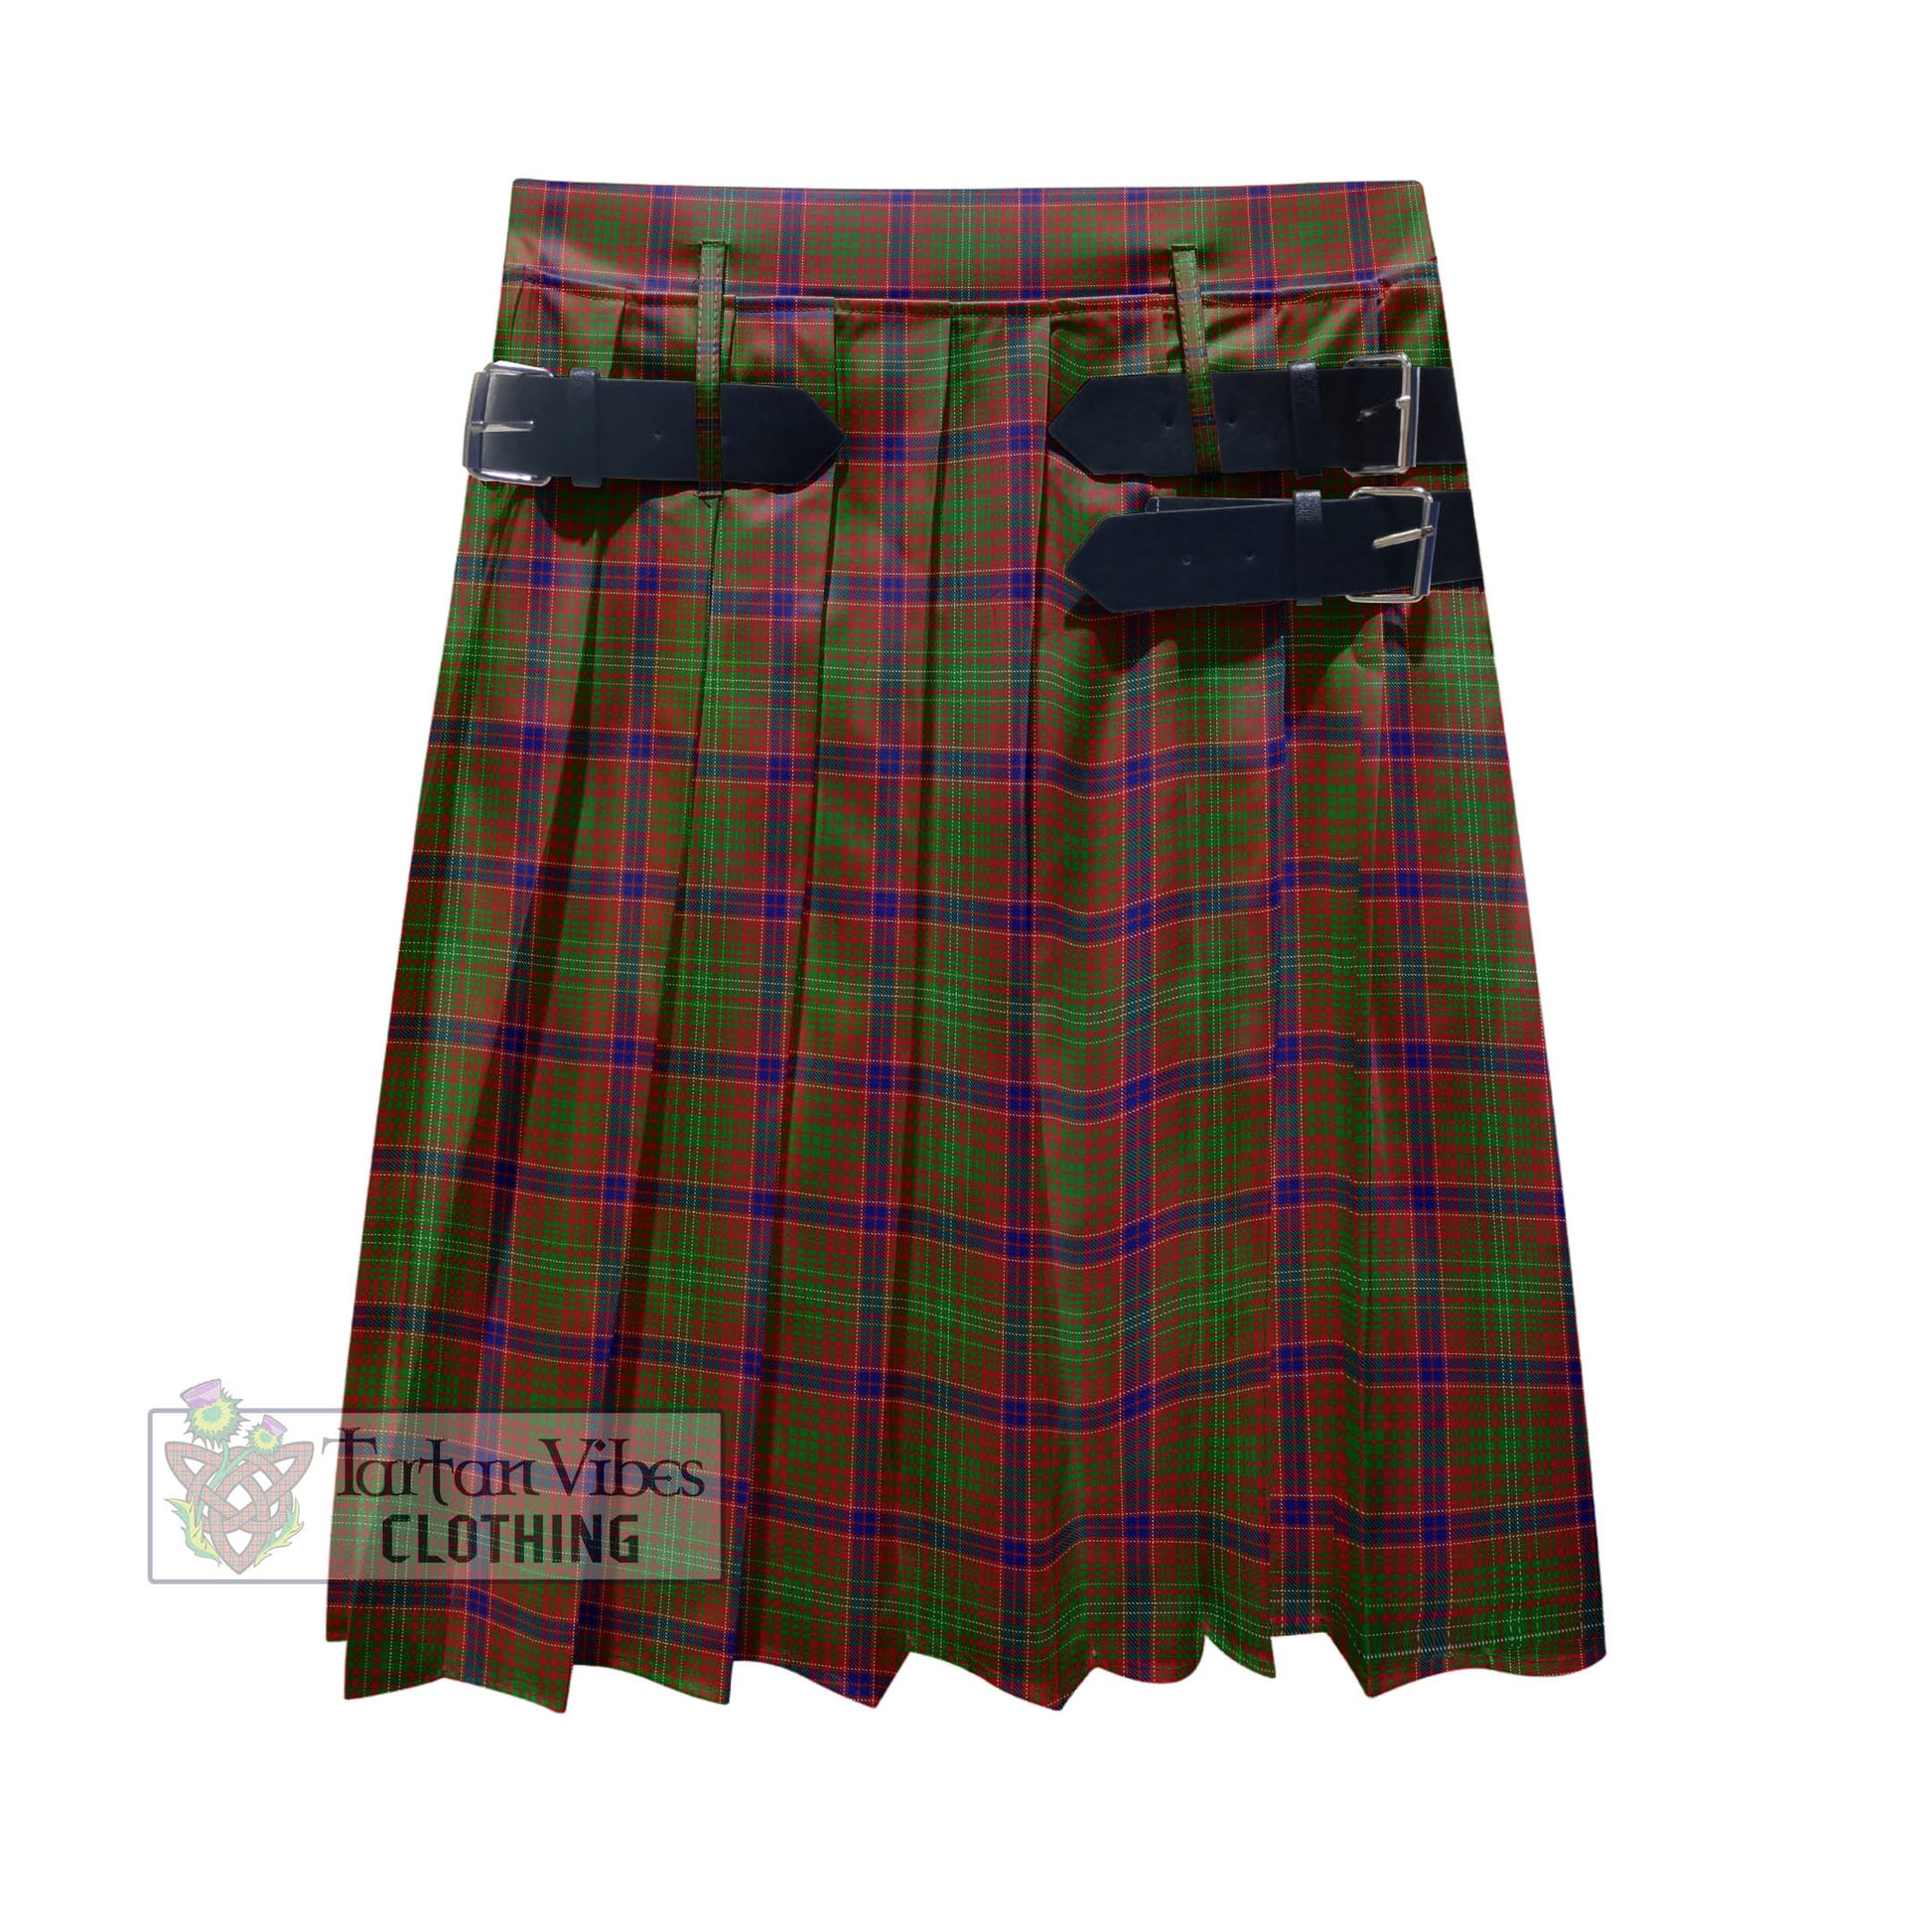 Tartan Vibes Clothing Lumsden Tartan Men's Pleated Skirt - Fashion Casual Retro Scottish Style